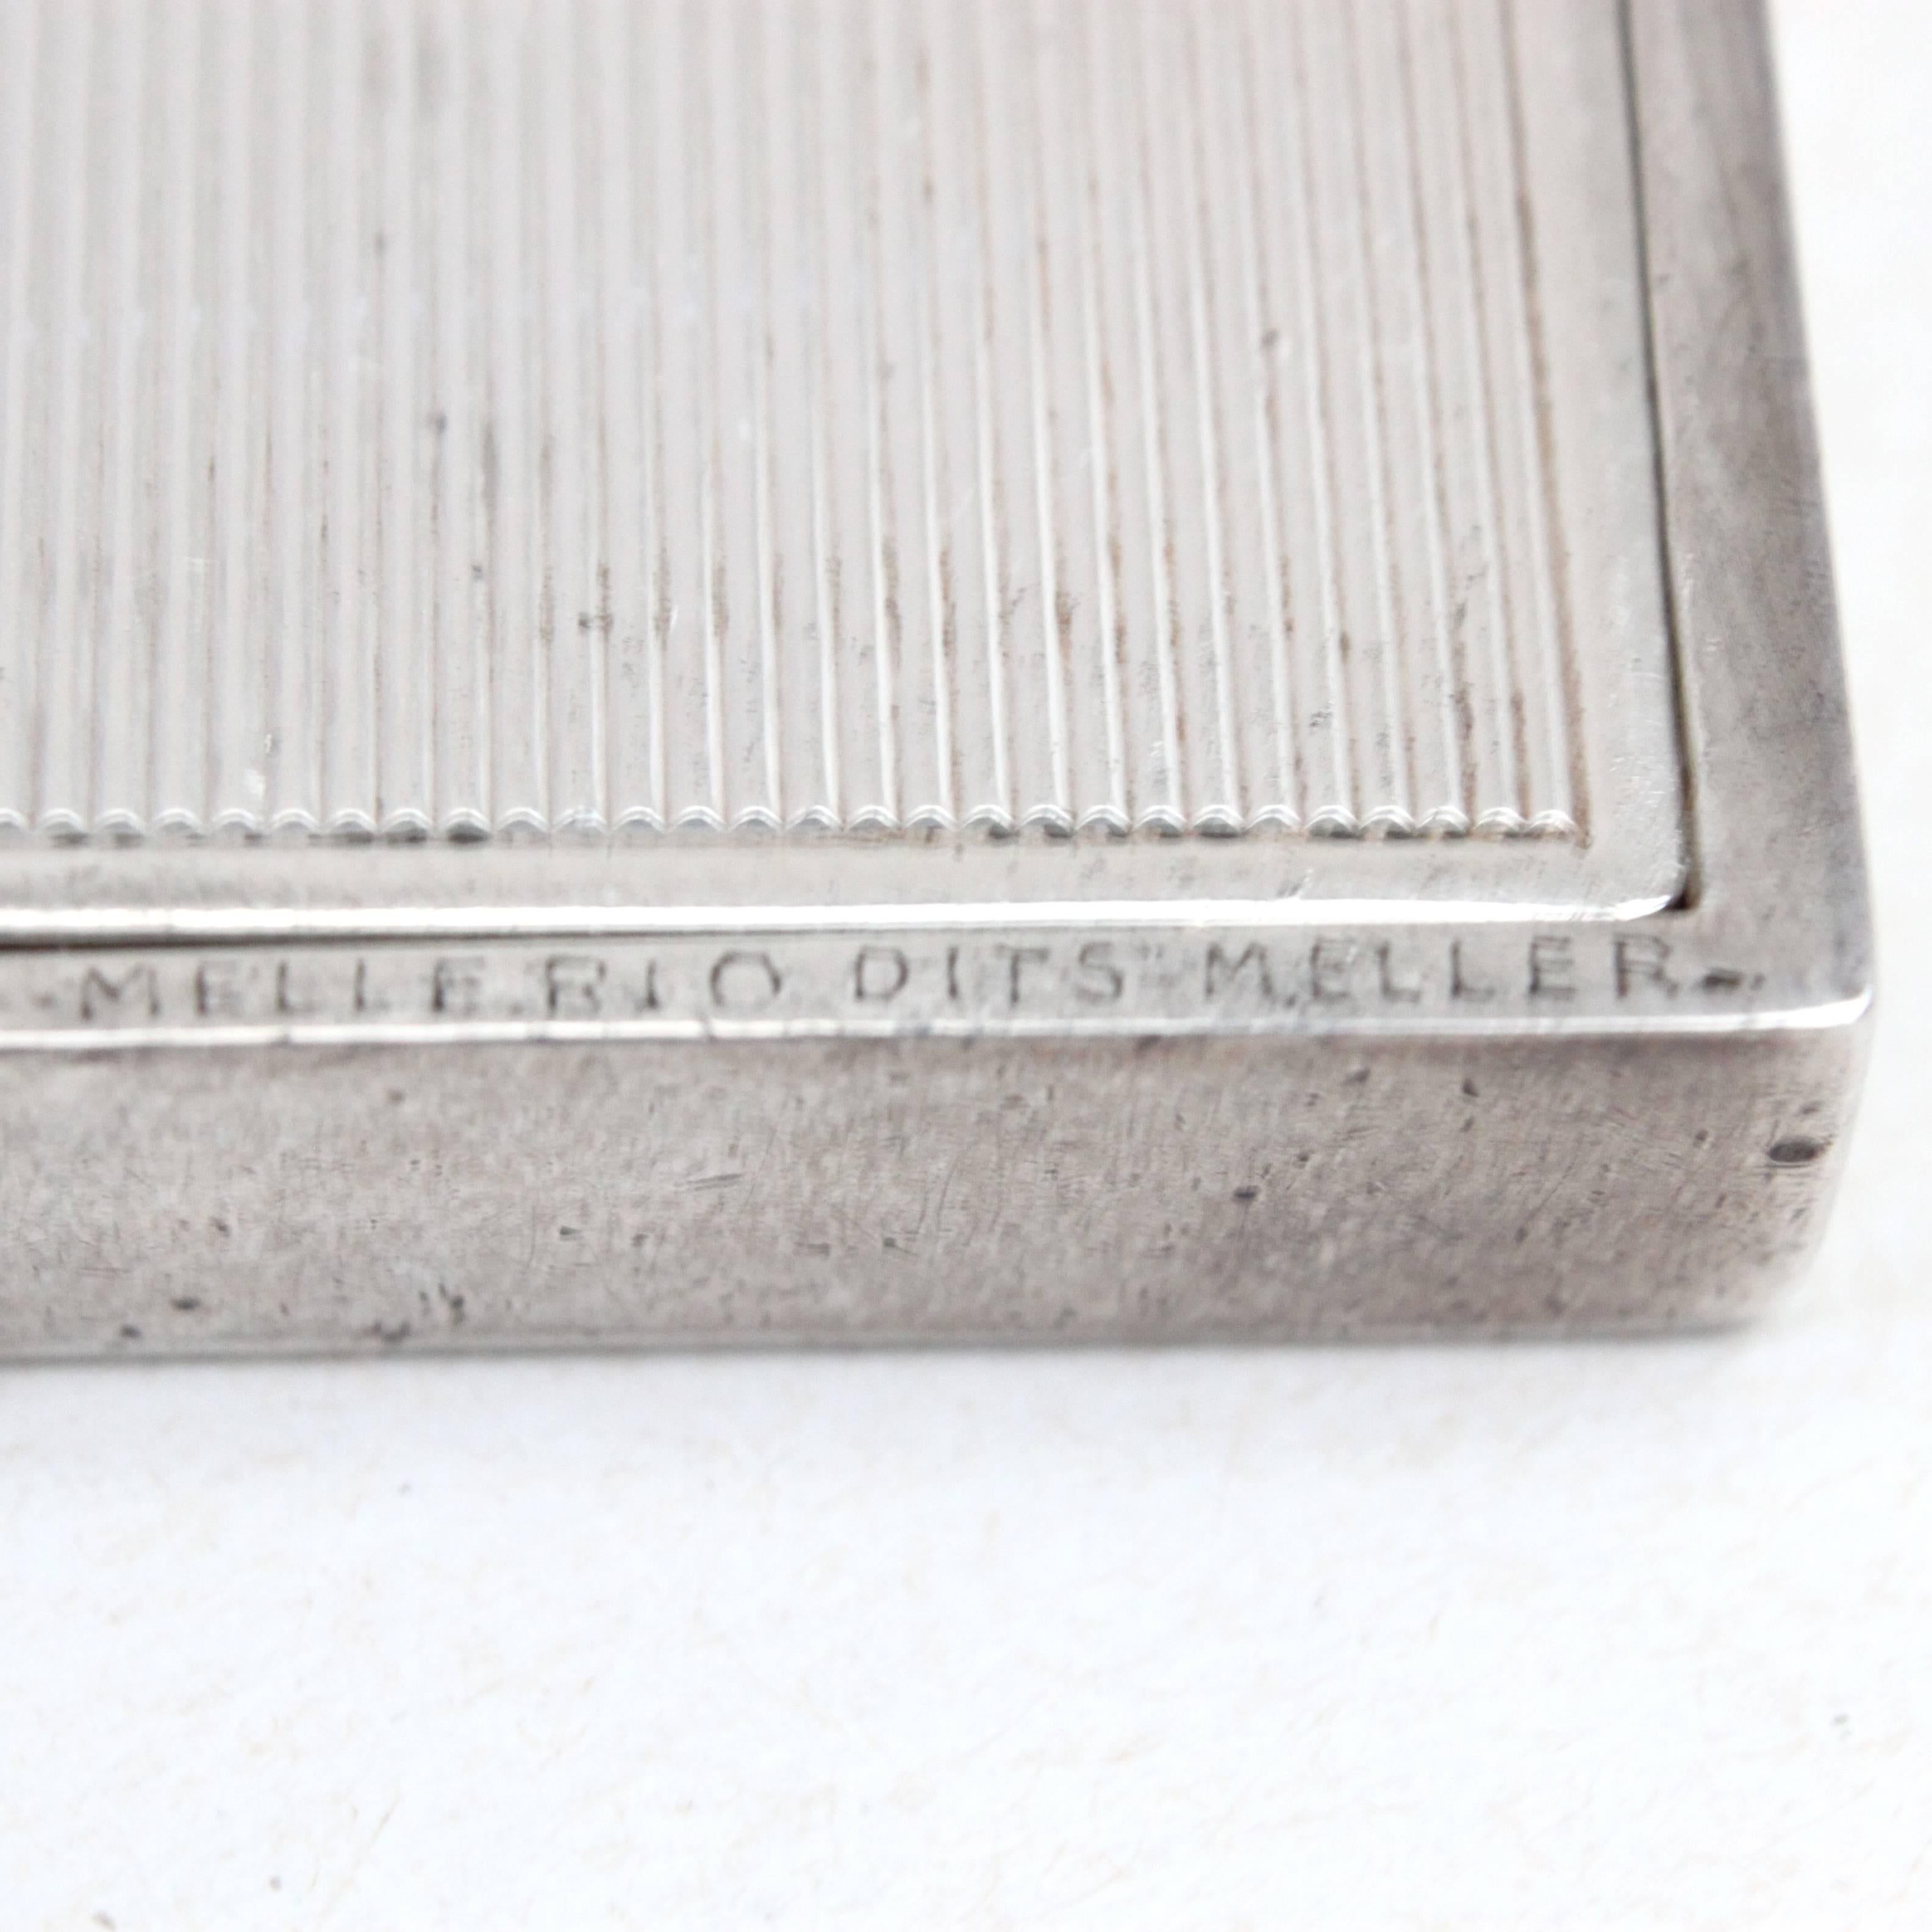 Mellerio Dits Meller Sapphire Silver Vanity Compact Box 1